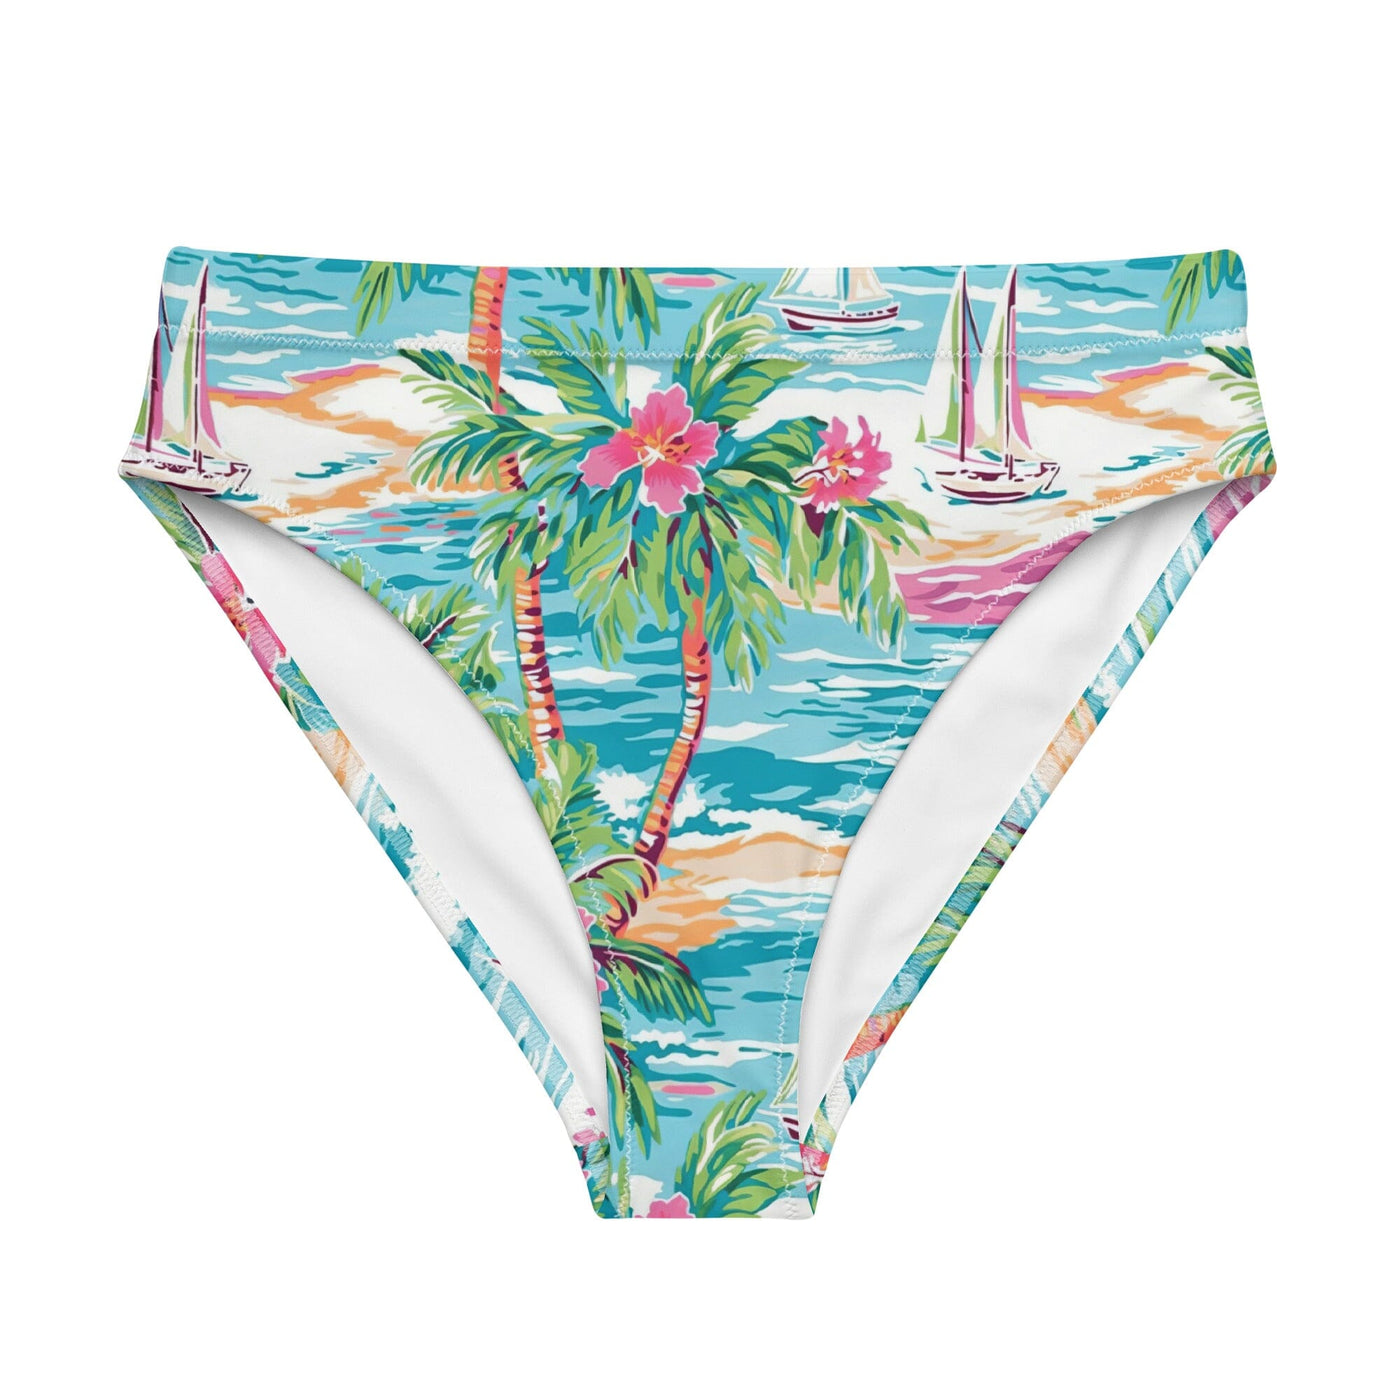 Cancun Bikini Bottom - Coastal Cool - Swimwear and Beachwear - Recycled fabrics